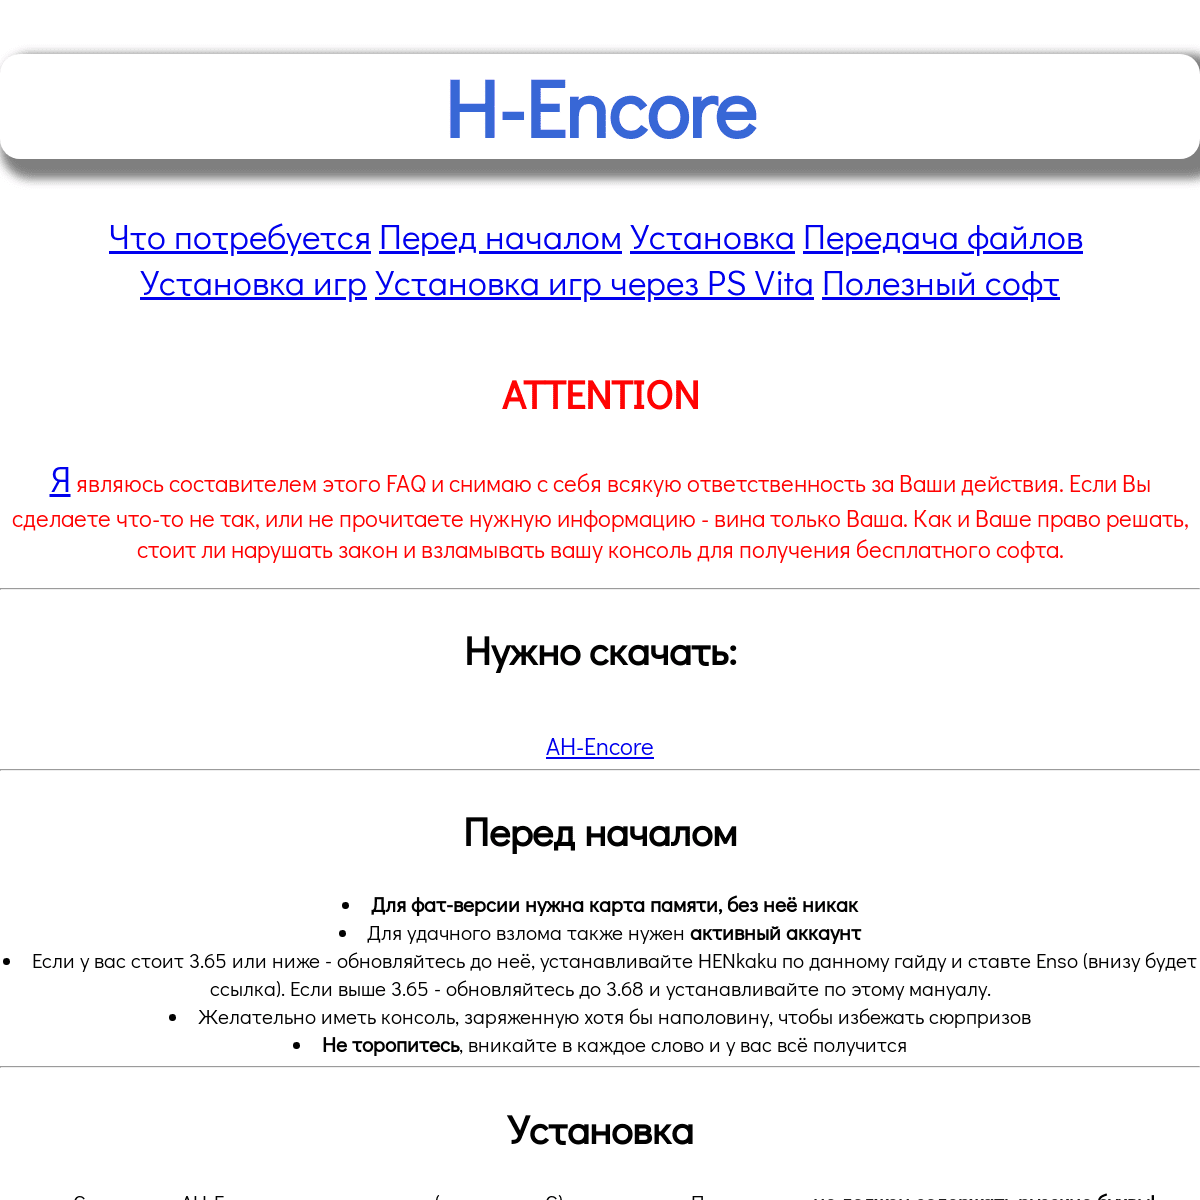 A complete backup of hencore.github.io